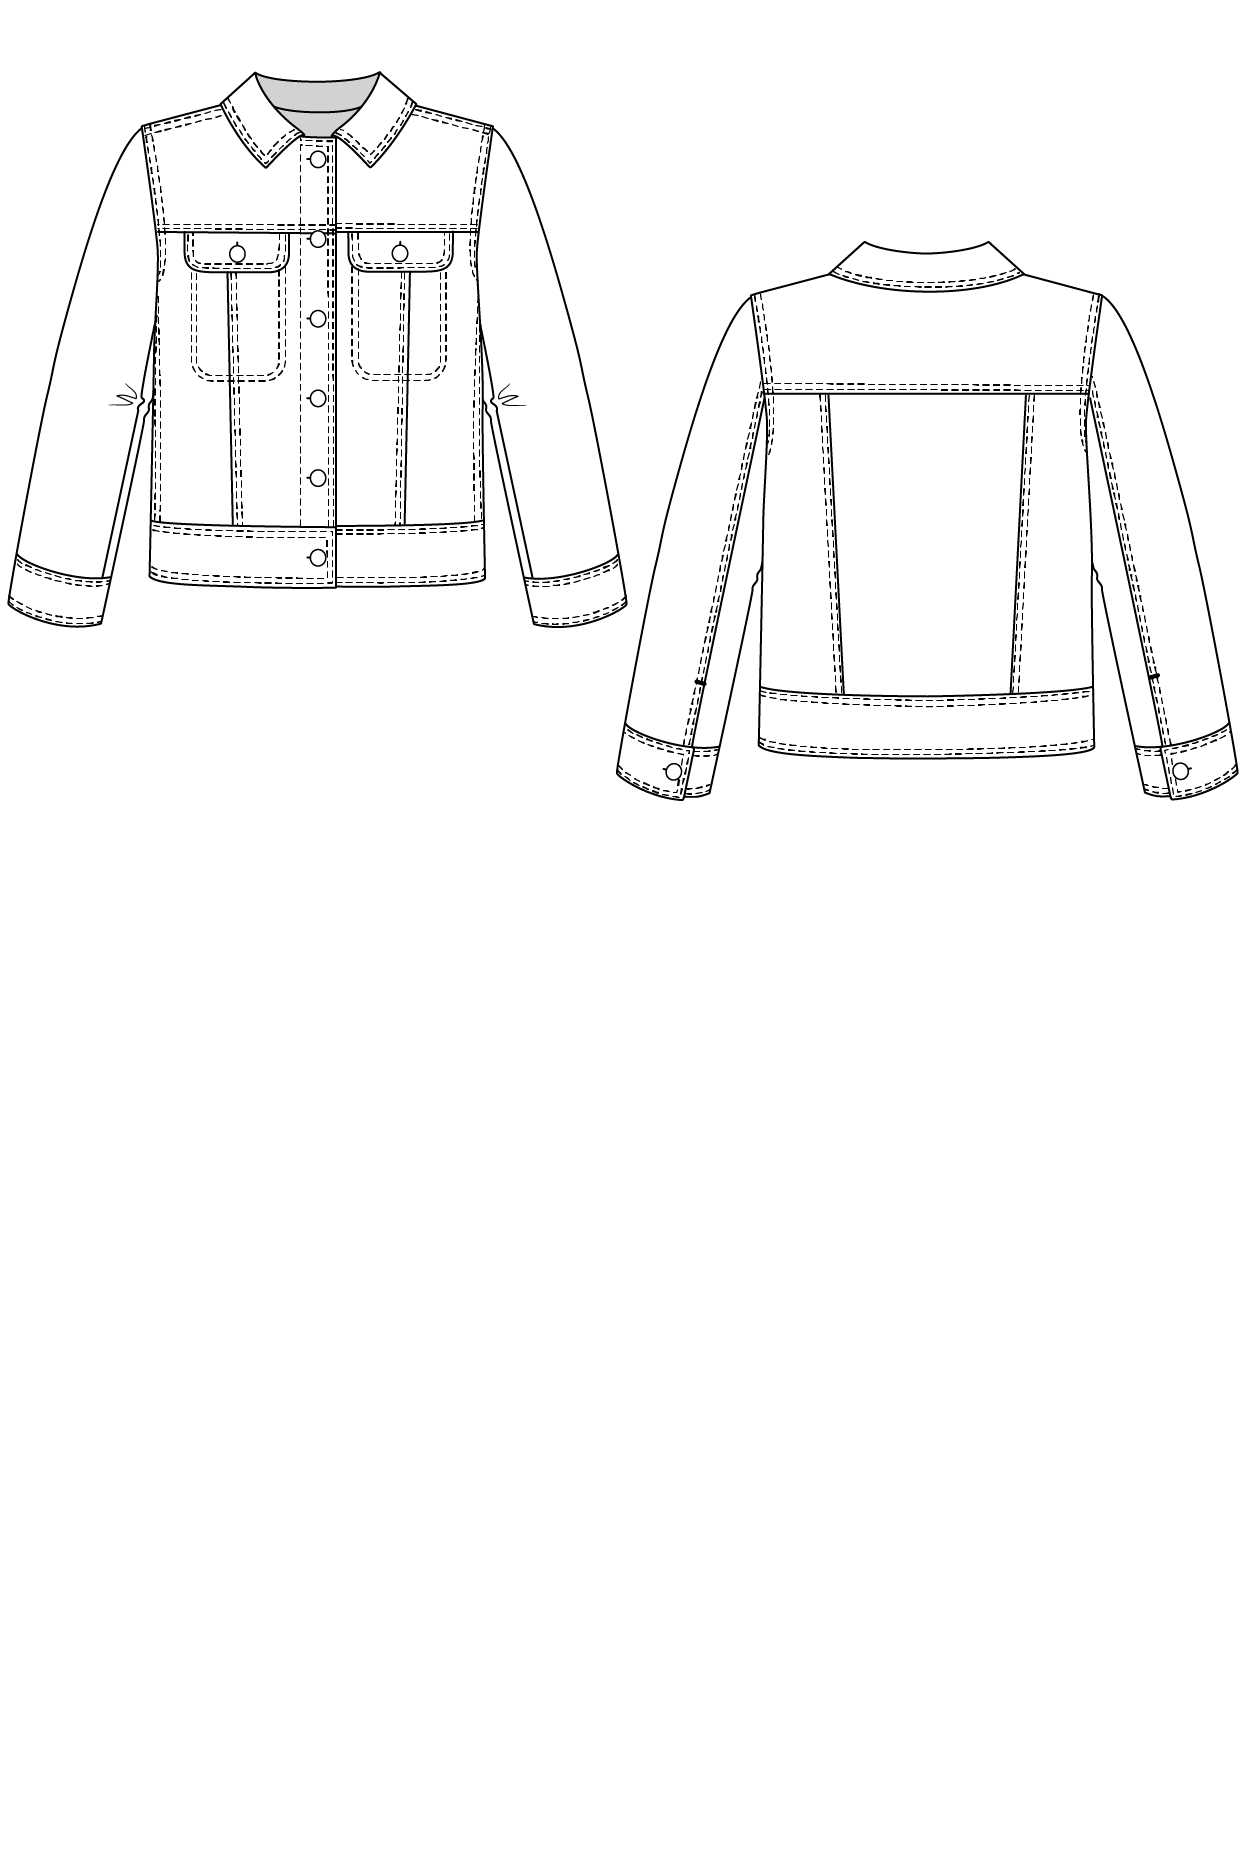 Maisa Denim Jacket Sewing Pattern | Named Clothing